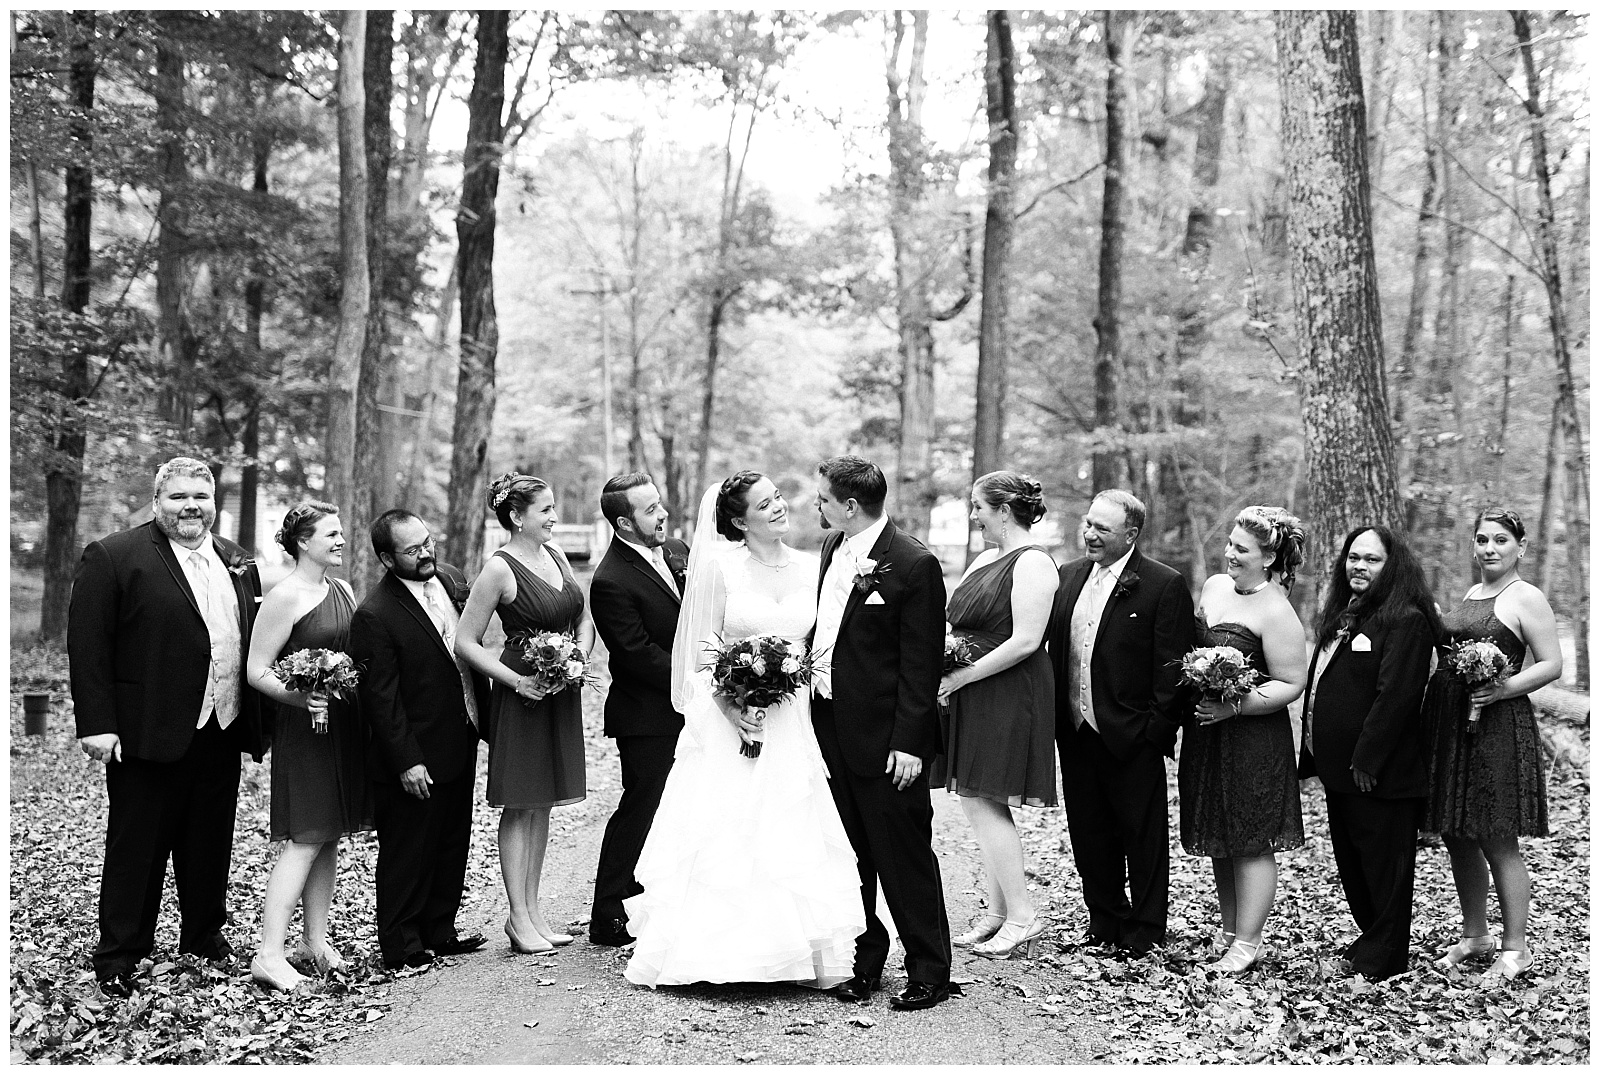 Autumn,David's Country Inn,Fall Wedding,Forest,Hackettstown,NJ Wedding Photographer,Wedding Party,Woods,